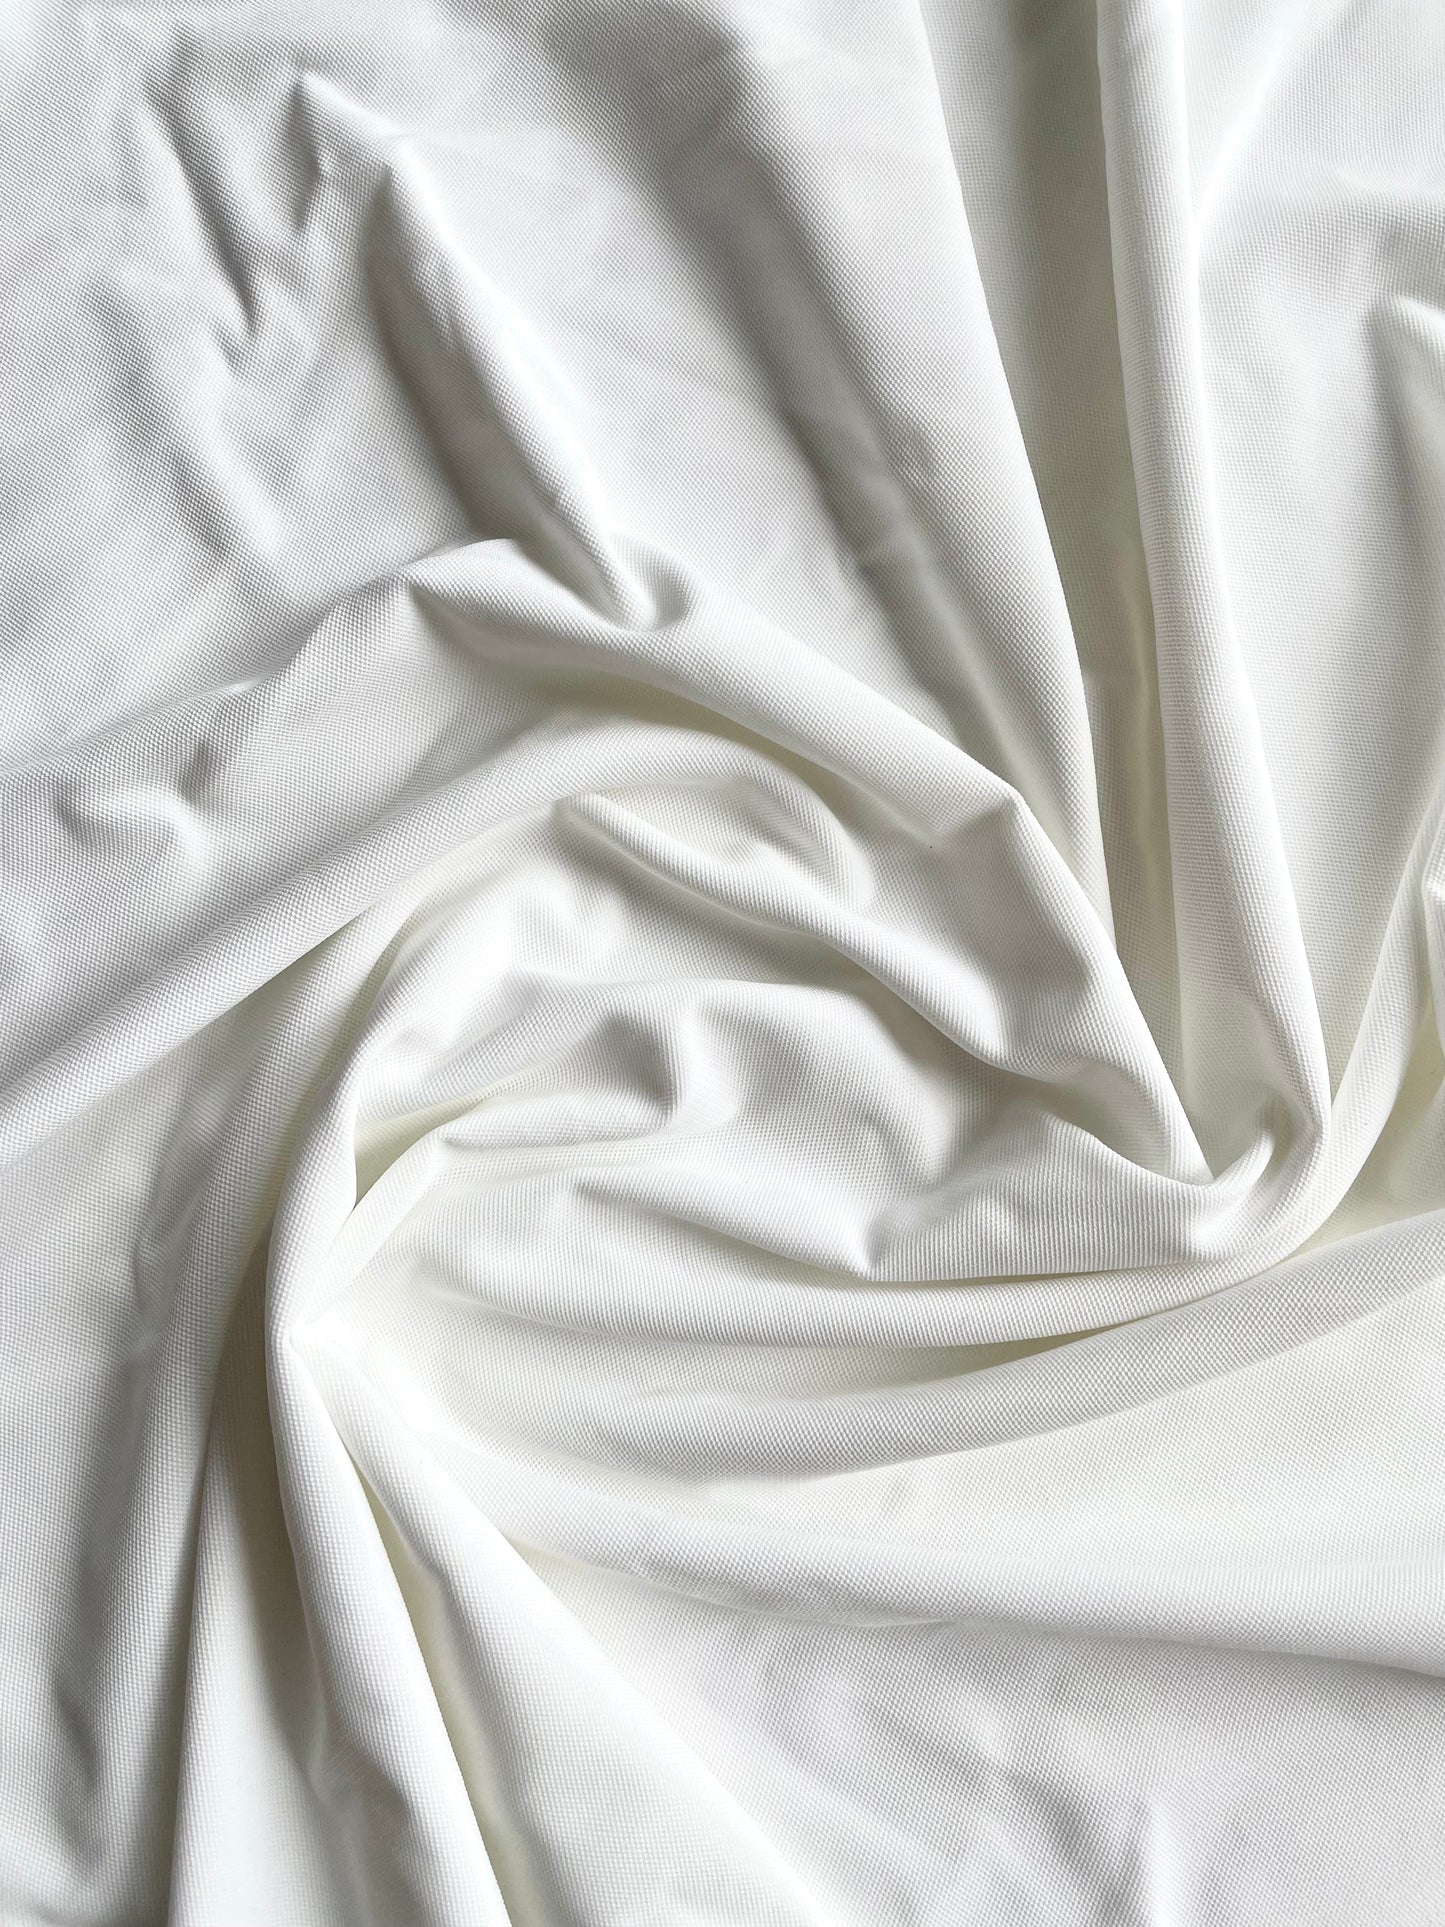 Lycra Mesh - Swimwear Lining - Off White